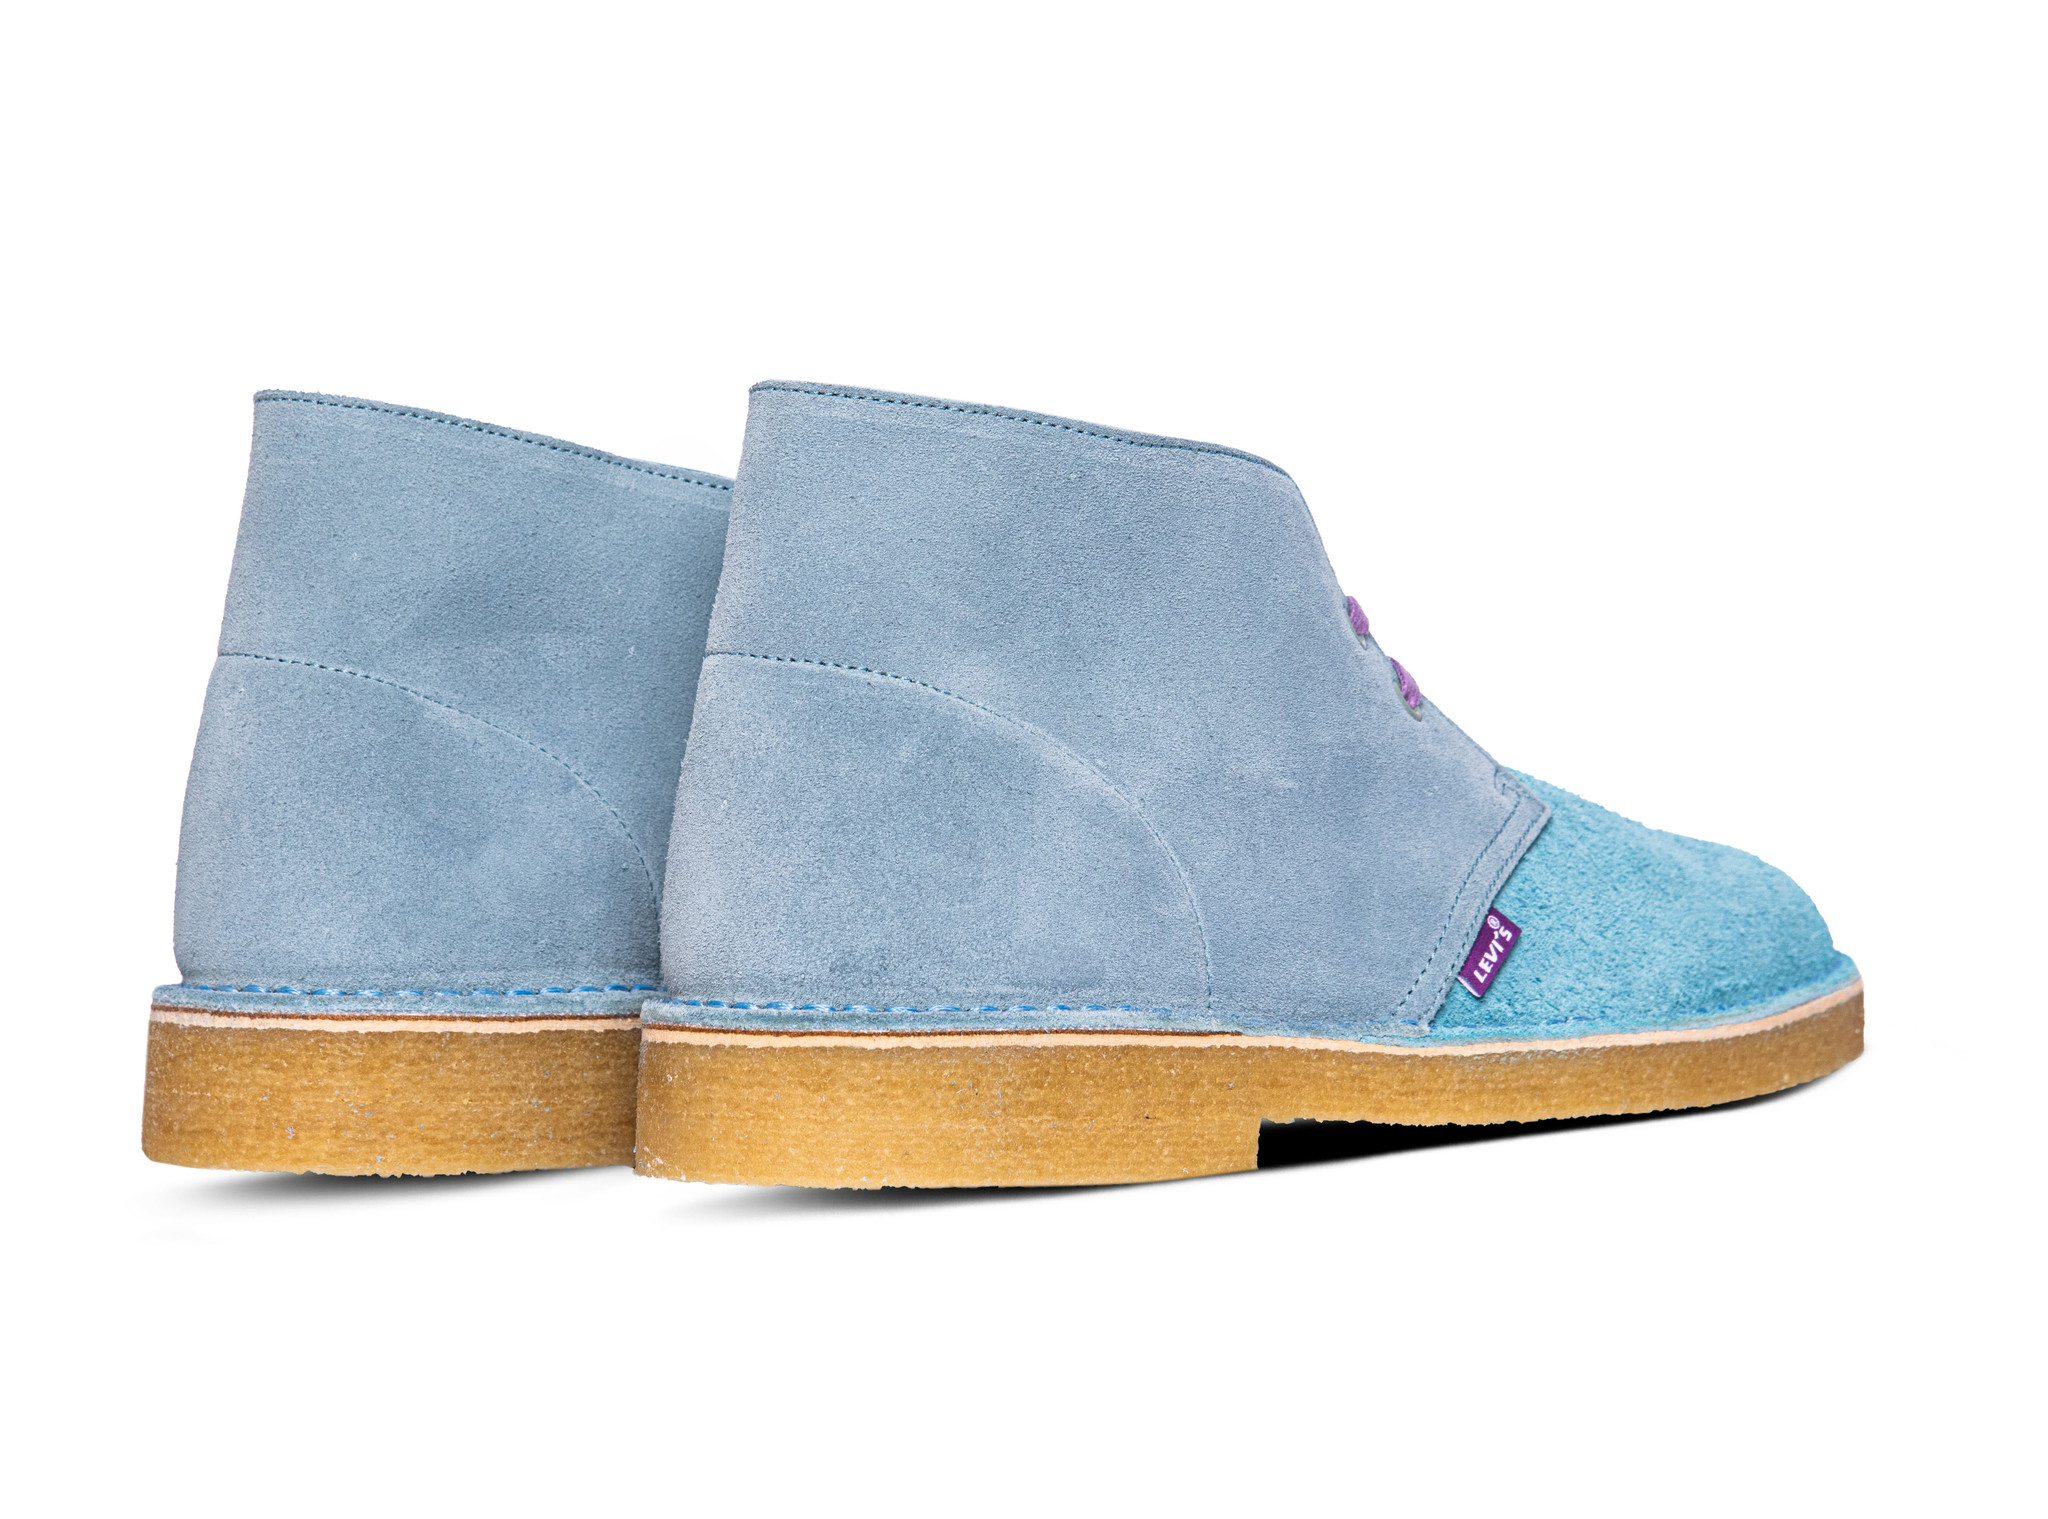 Clarks Originals x Levis Desert Boot Pale Blue 26160325 - Bruut Sneakers &  Clothing Store